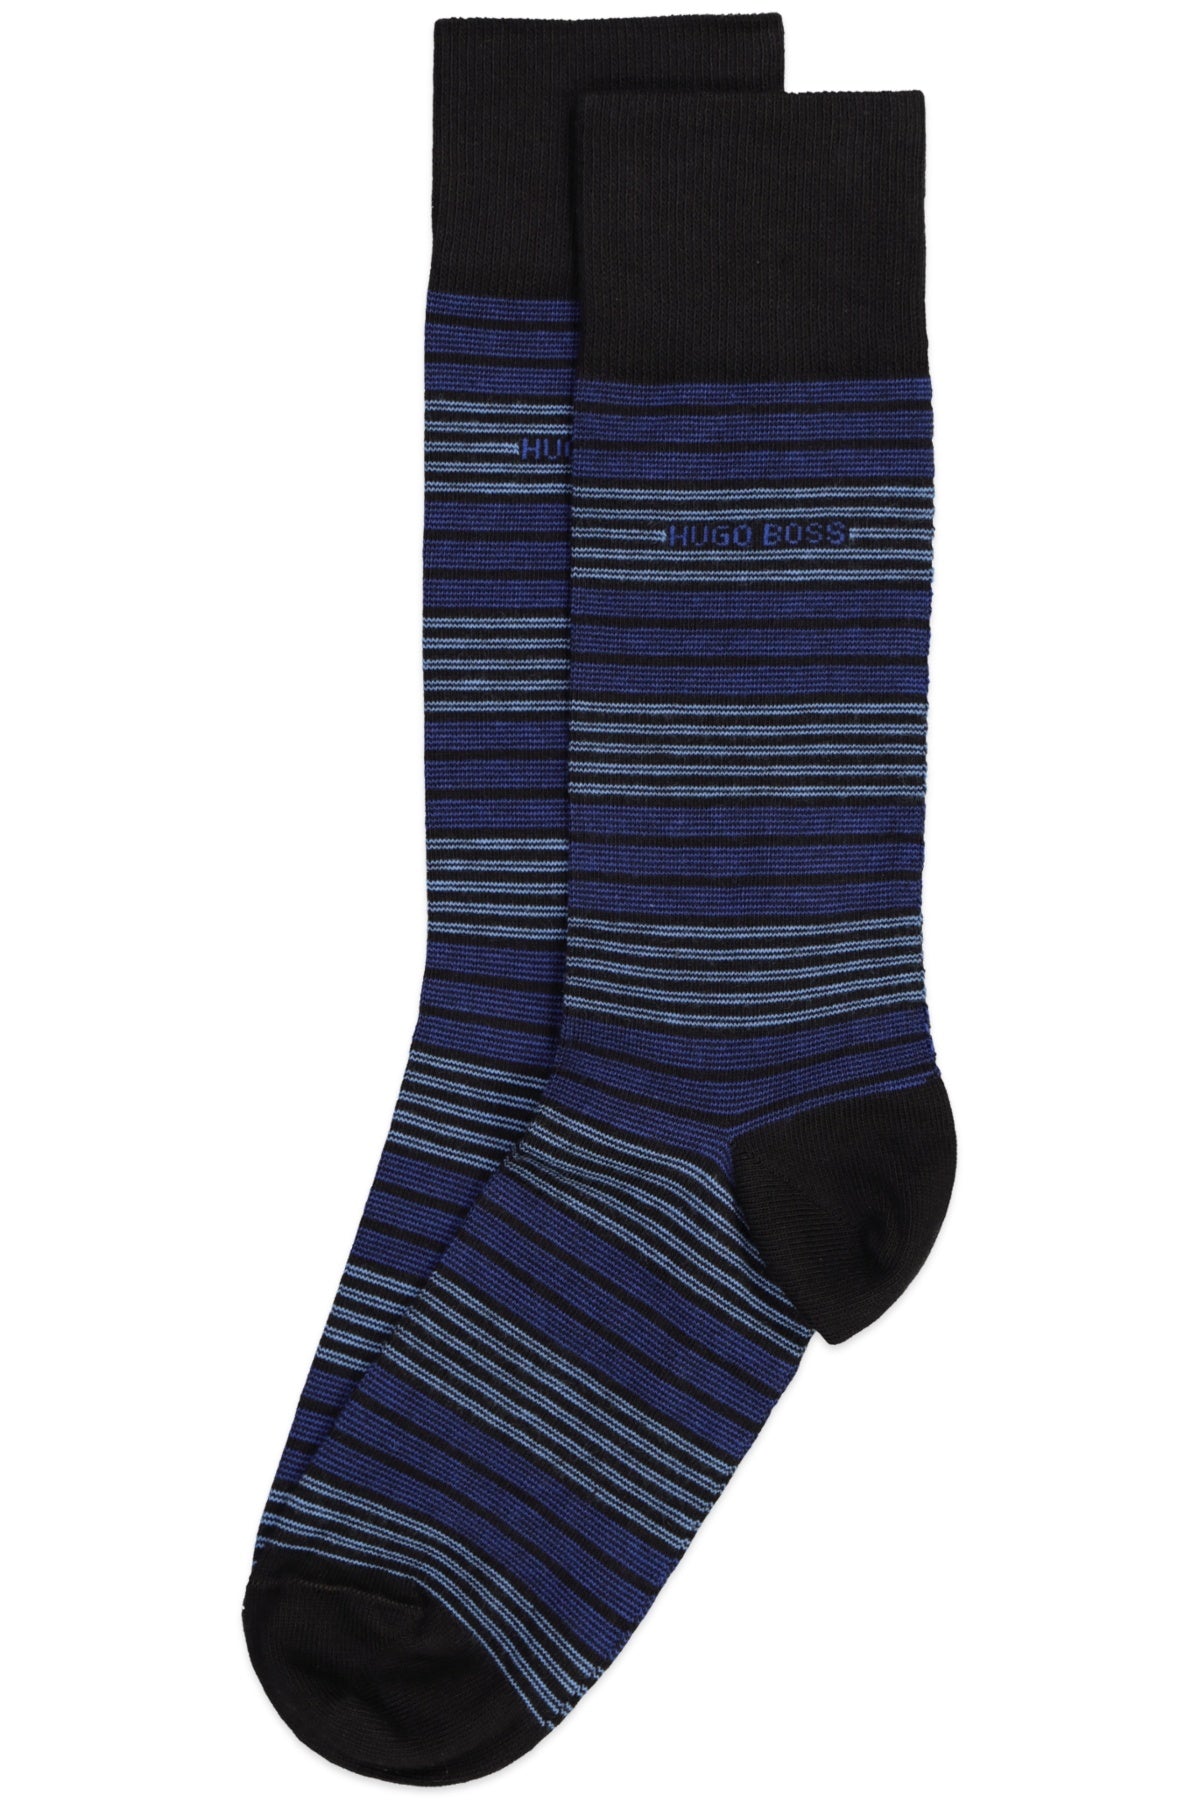 Hugo Boss Royal & Navy Stripe Combed Cotton Sock